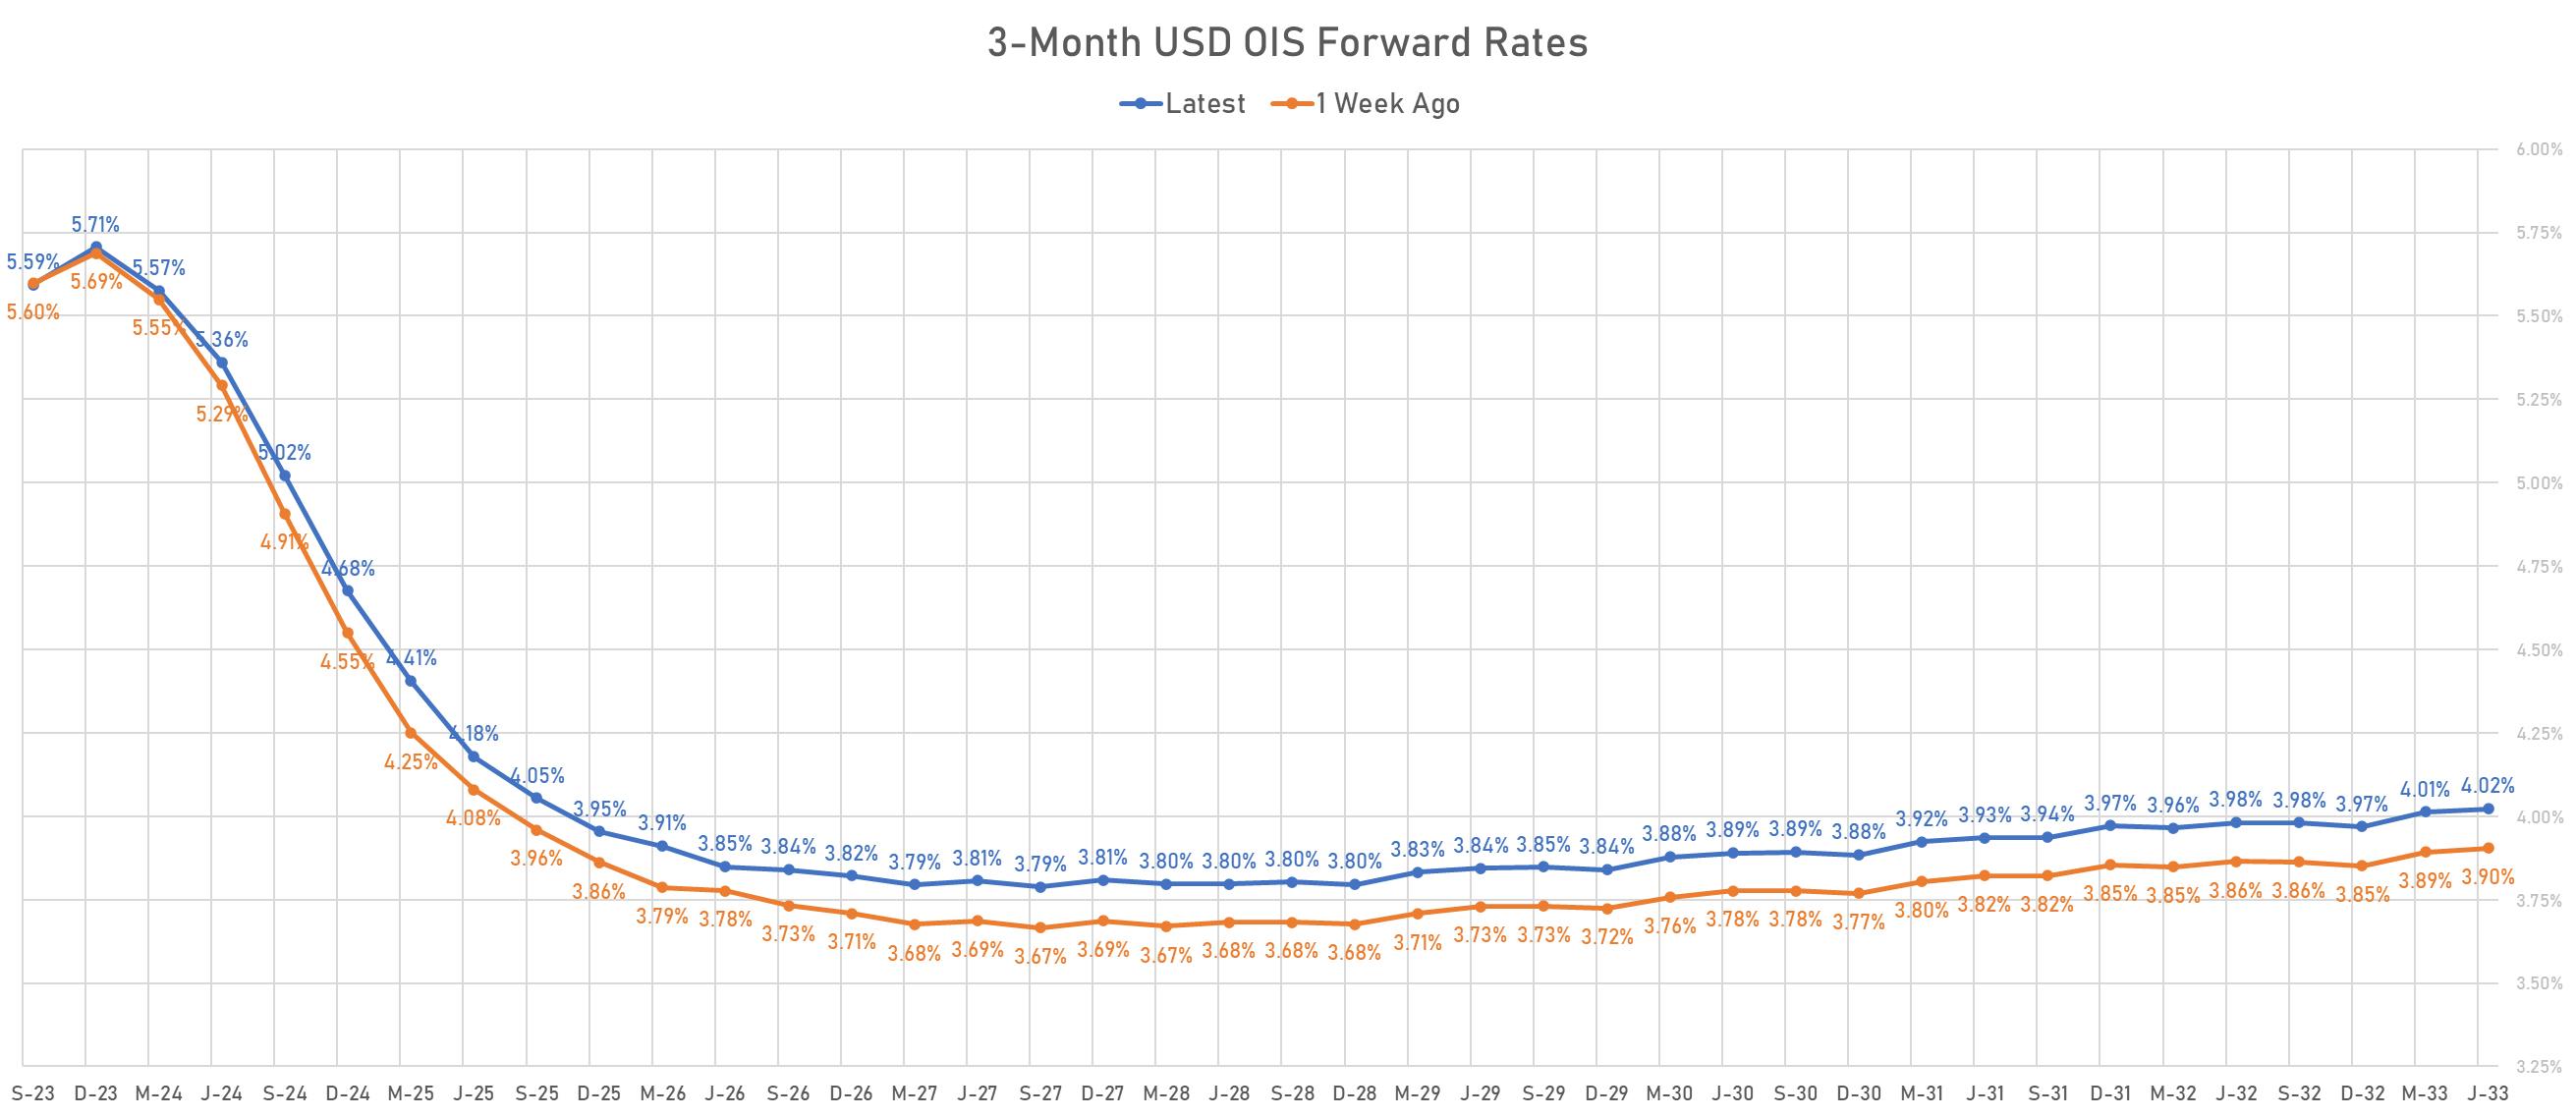 3M USD OIS Forward Rates | Sources: phipost.com, Refinitiv data